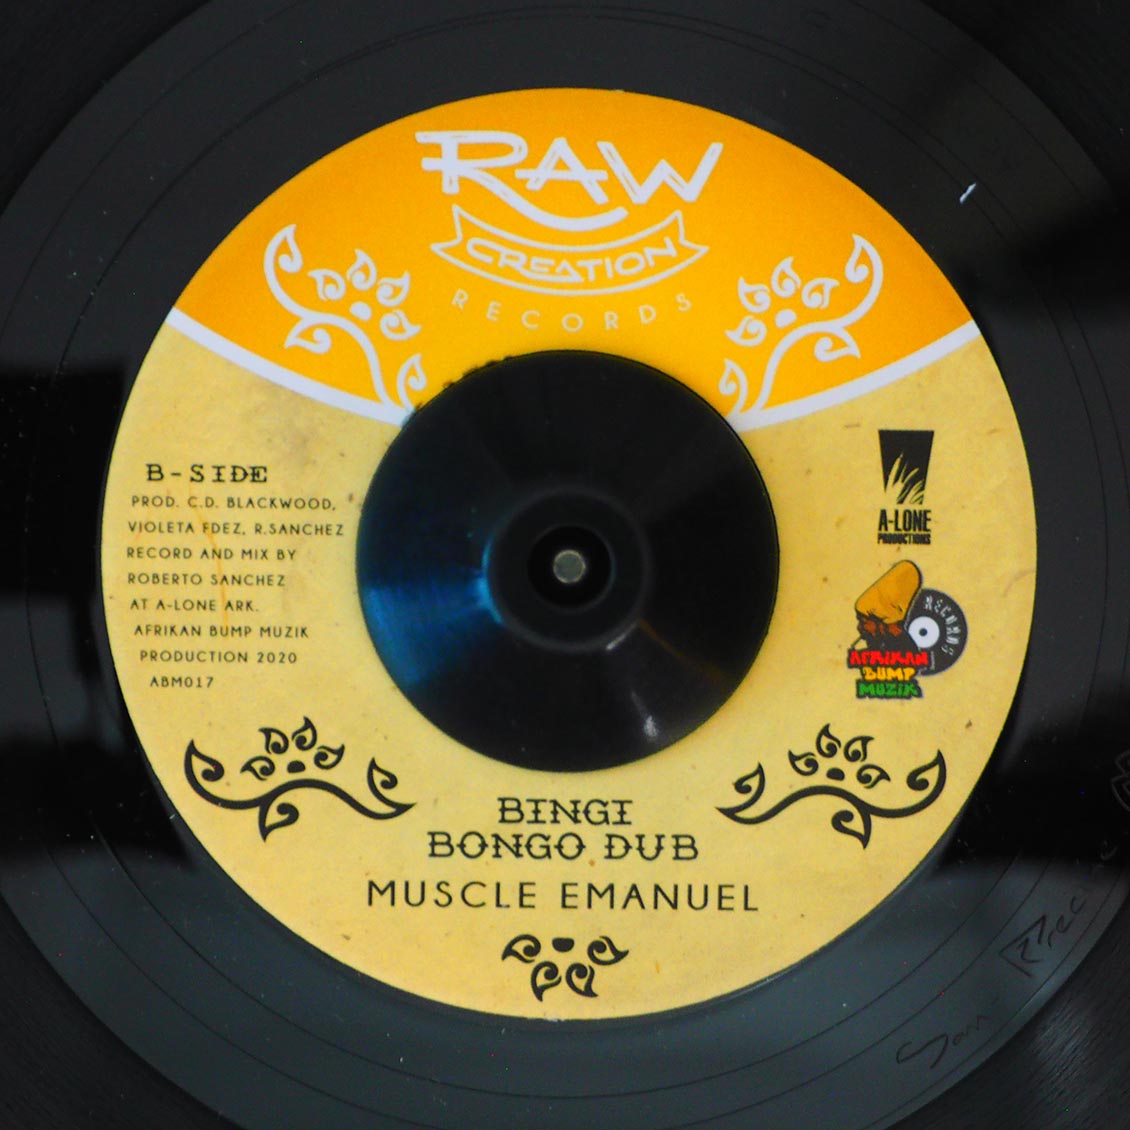 Muscle Emanuel - Bingi Bongo / 7" vinyl, Raw / African Bump, Limited Edition